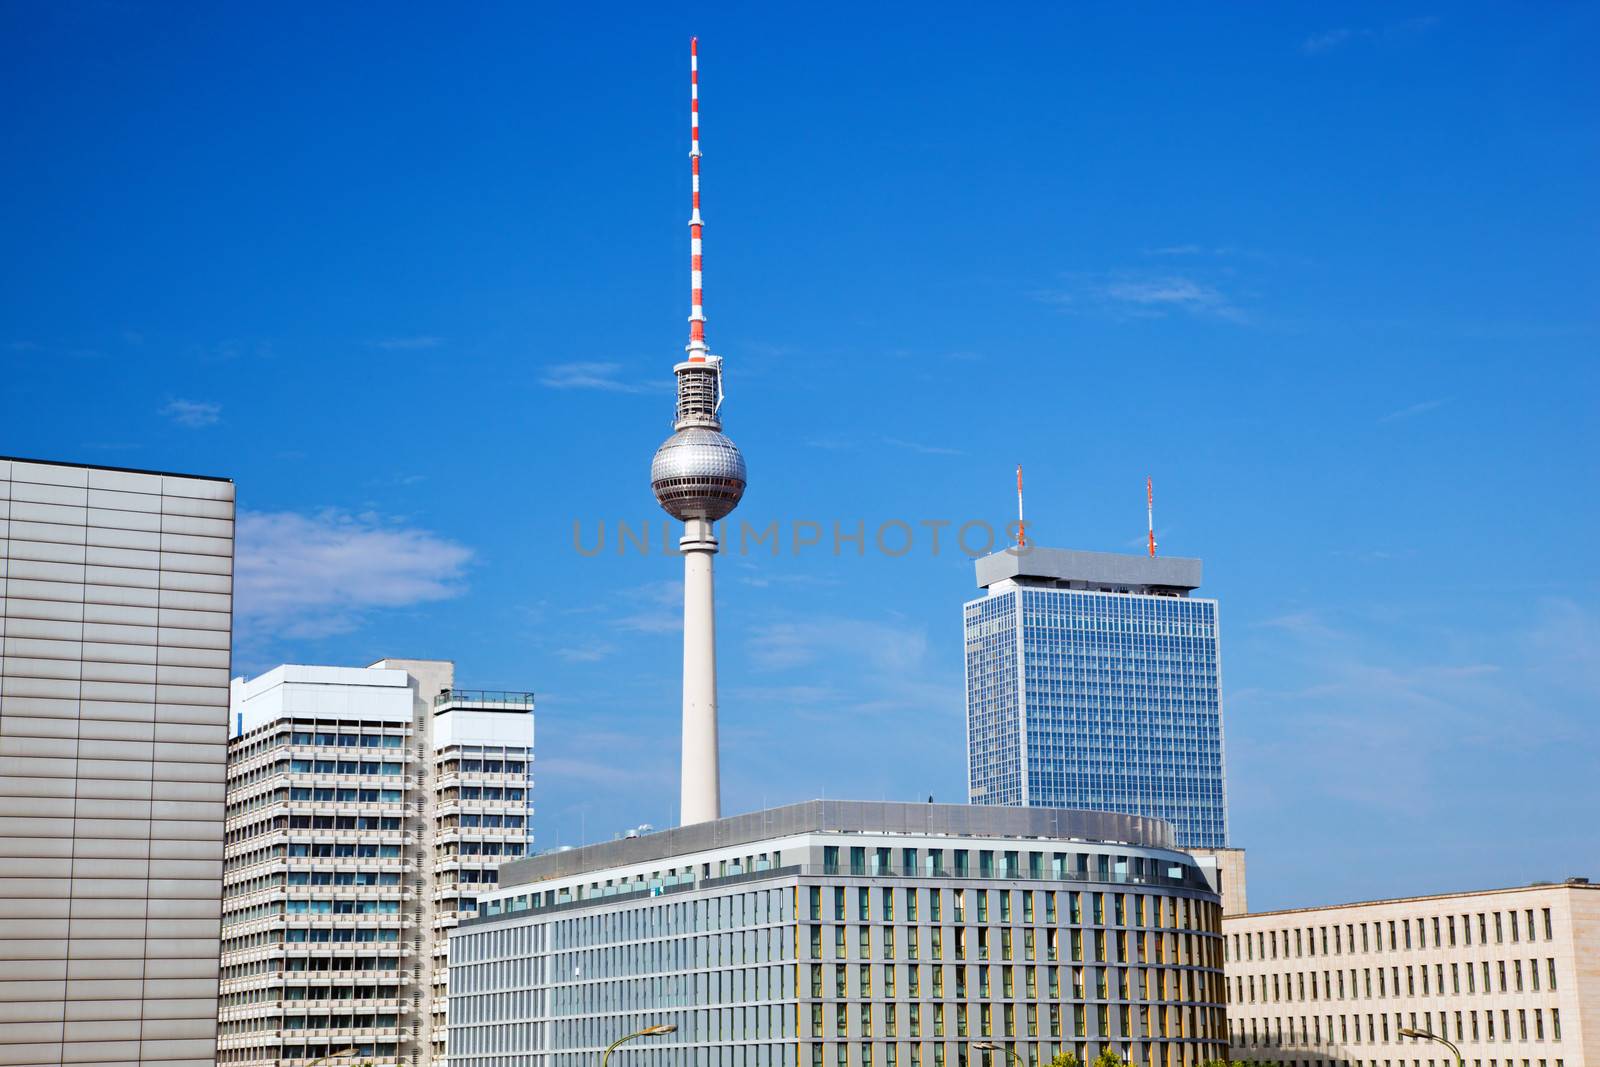 Television tower, German Fernsehturm seen from the eastern part of Berlin near Alexanderplatz.